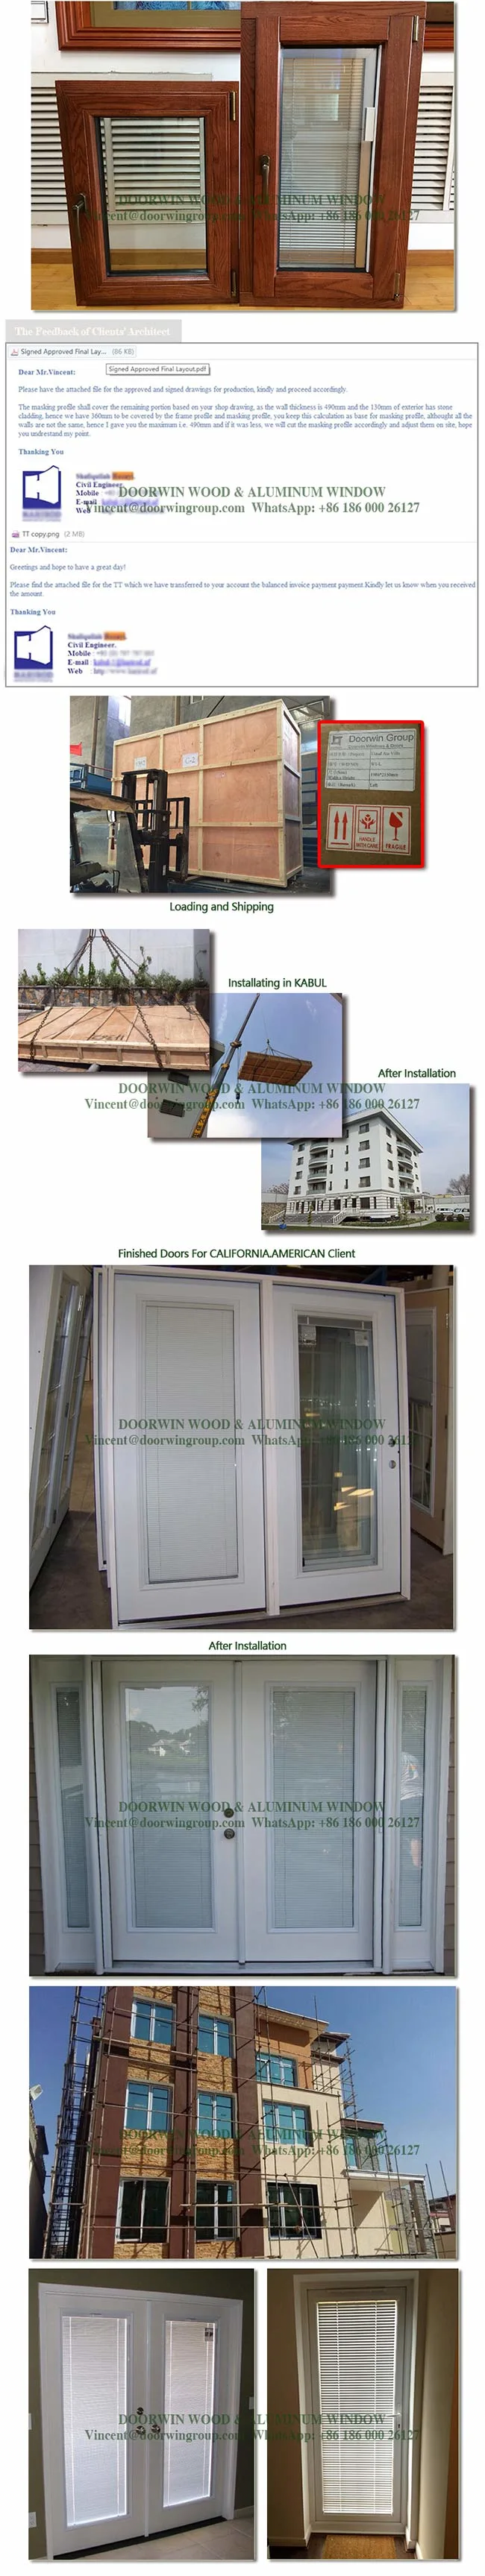 Aluminum Clad Wood Casement Window Built-in Blinds Integral Shutter Inward Opening Window Afghan Client